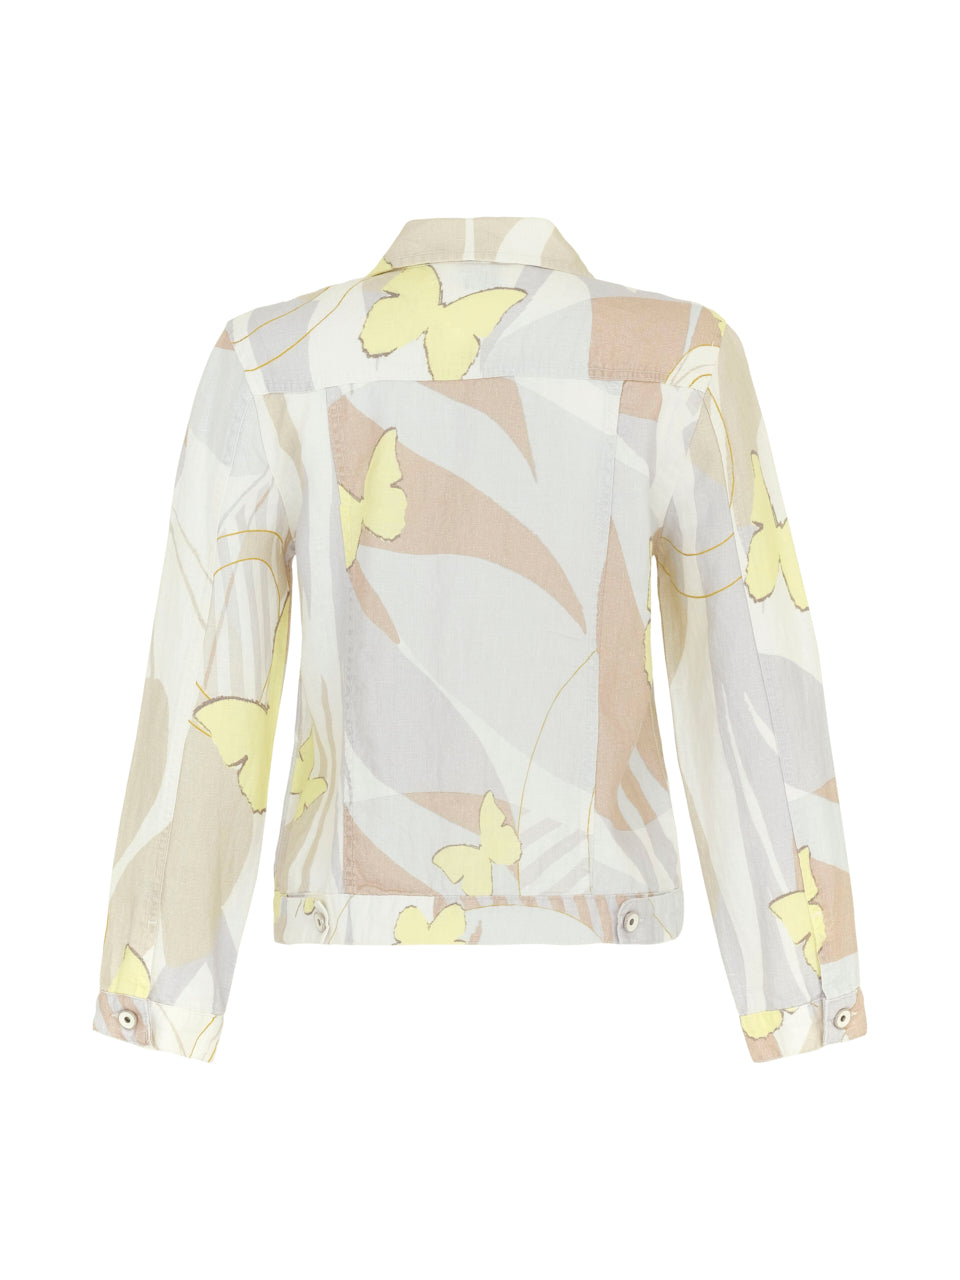 Simply art by Dolcezza - Linen Jacket - Yellow Butterflies